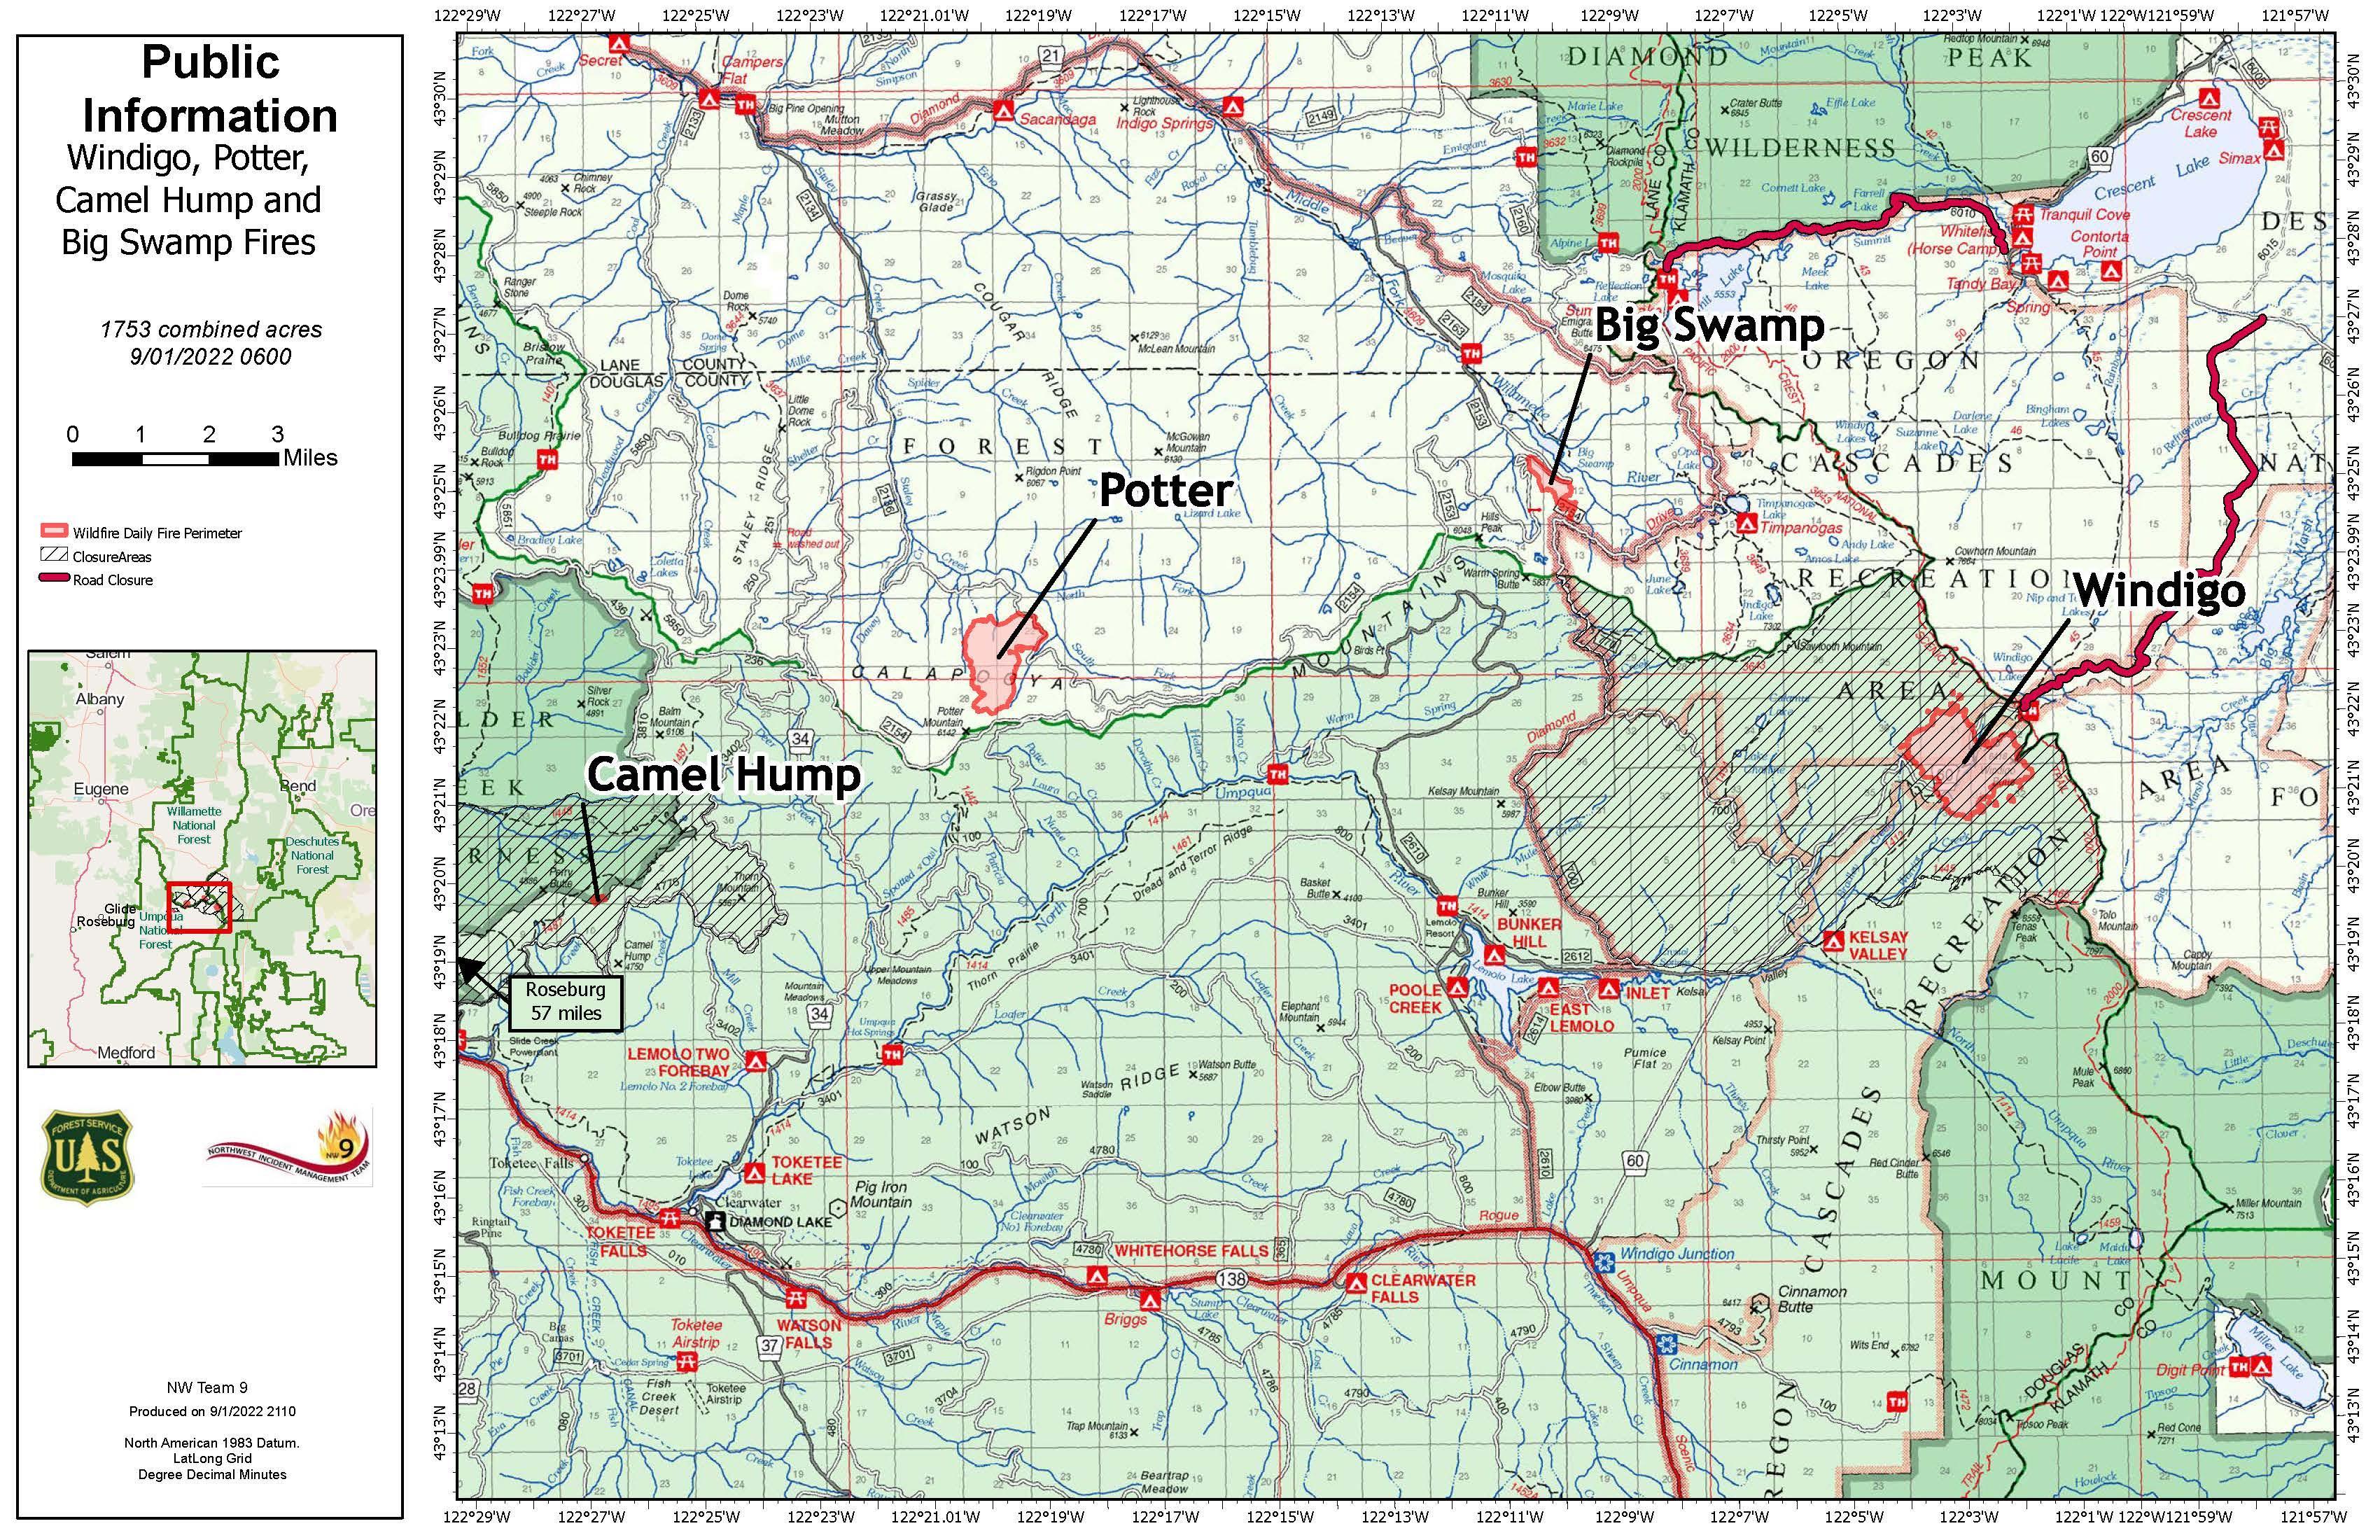 Windigo Potter Big Swamp Map Sept 2, 2022